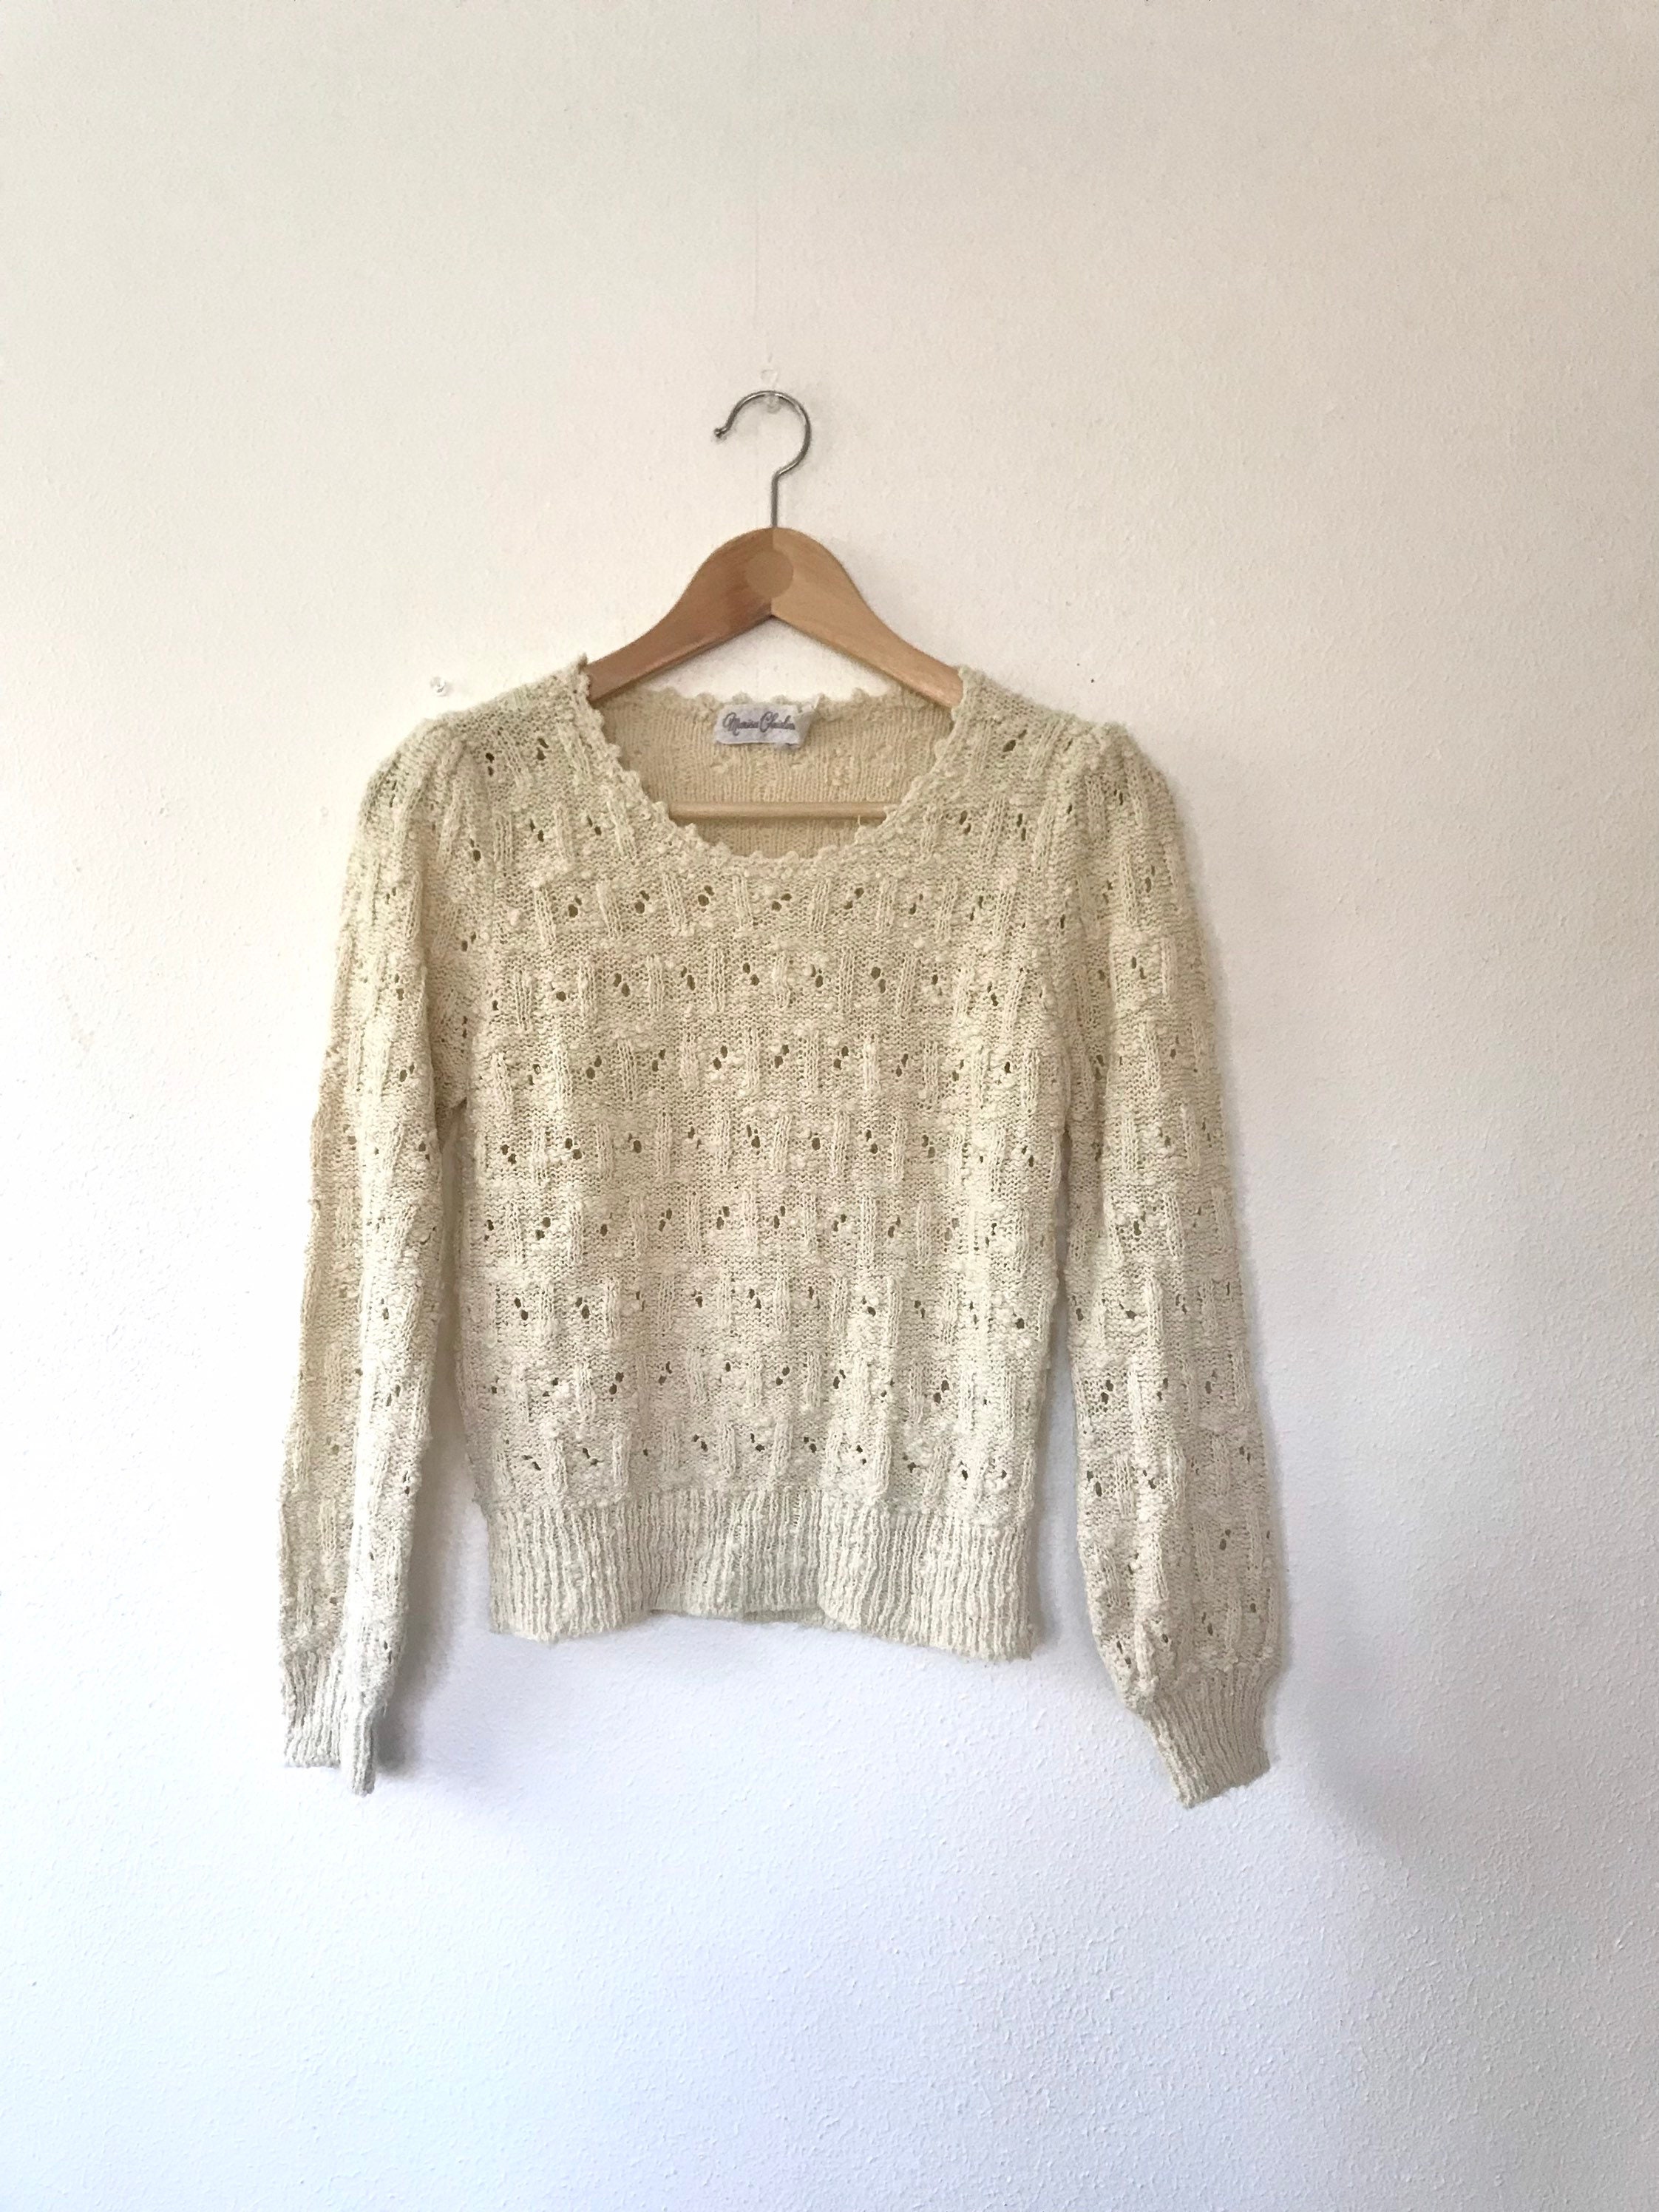 vintage knit sweater / 80s sweater / Marisa Christina Sweater